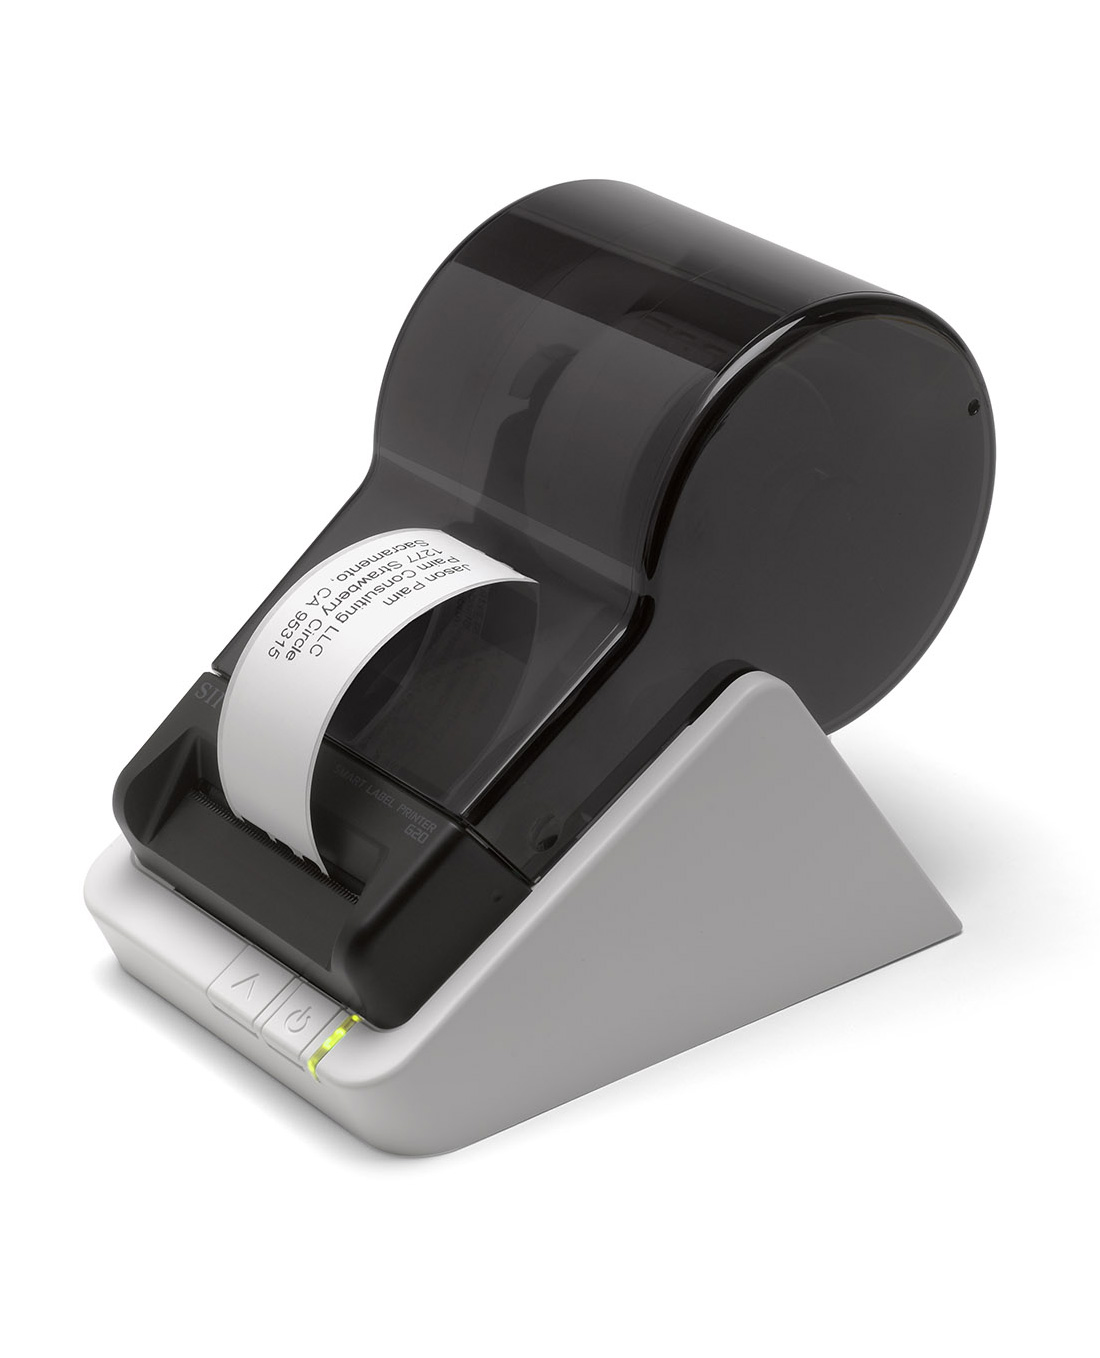 SLP 620 - Smart Label Printers